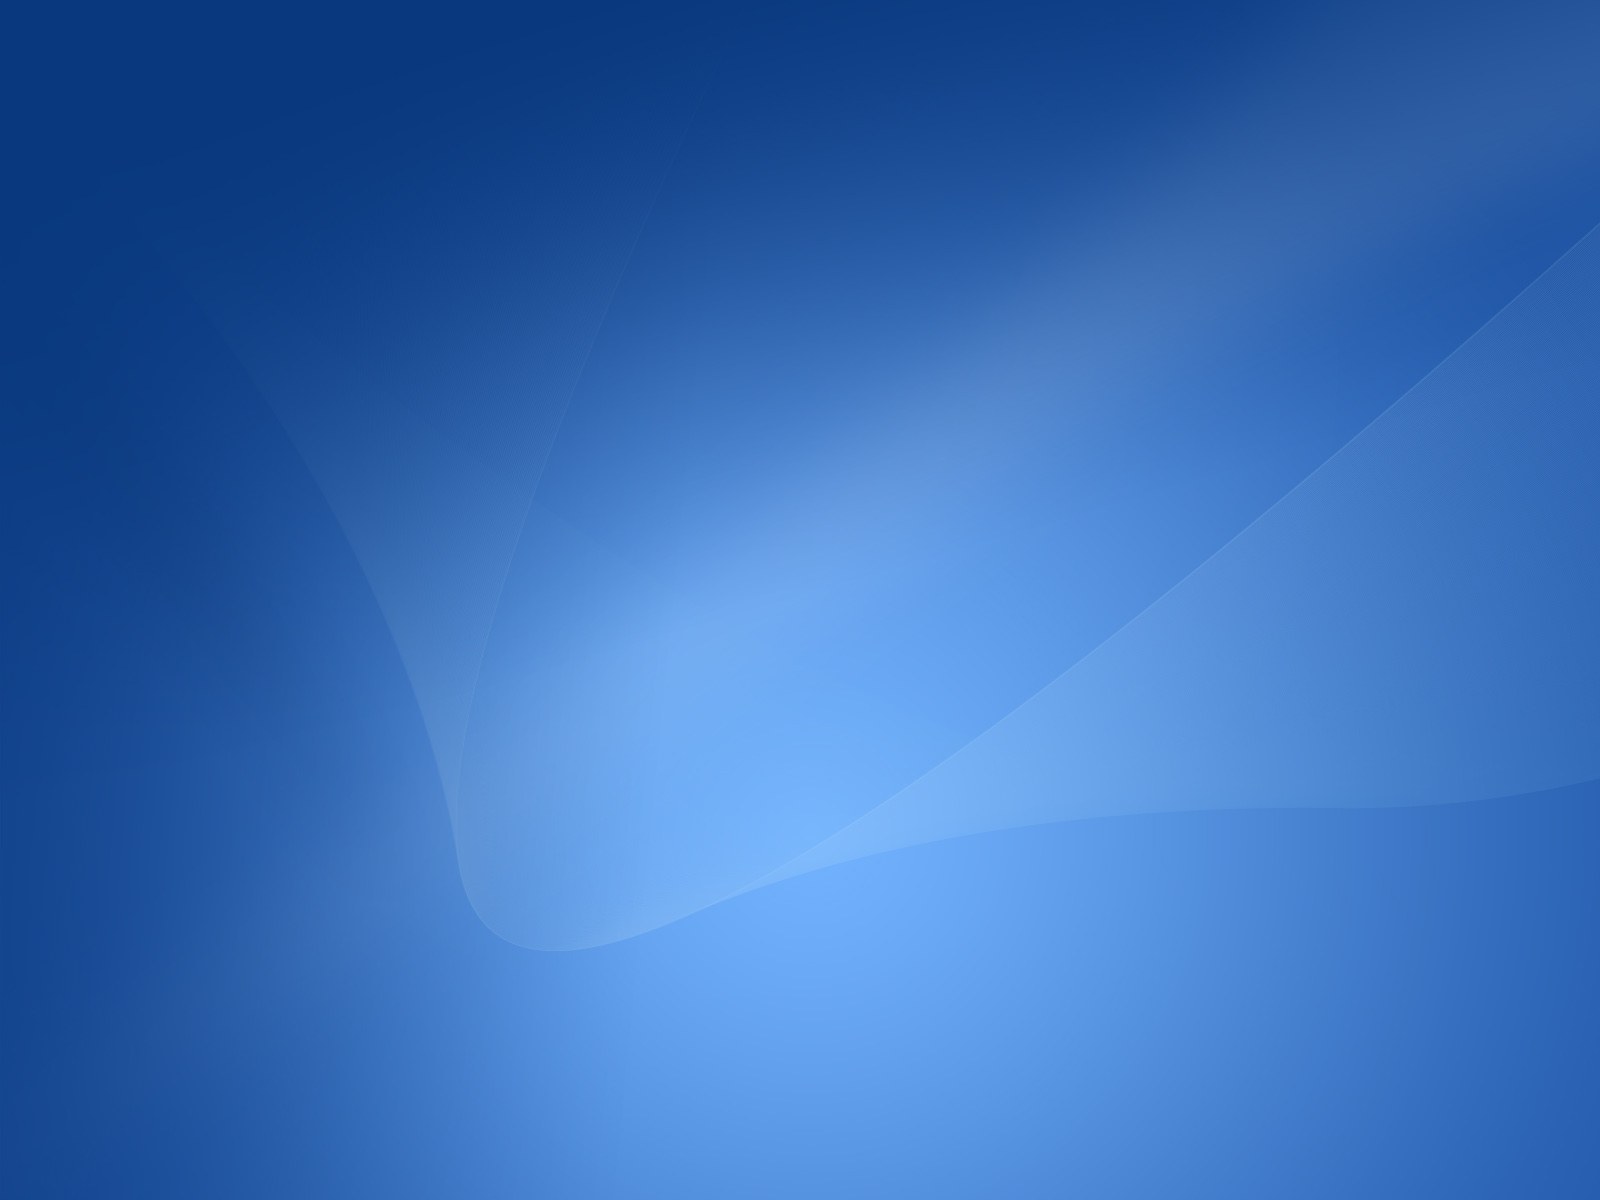 https://blogger.googleusercontent.com/img/b/R29vZ2xl/AVvXsEhTaxbDIhDt77REIDhtvqZRtCL5Xzk7Eufd8idJisoNKEKzPsDq0SRlEQPiW6lLw6LAfSvd4MkeXPz8KeAnGi7SN3URk2gh9sPnoPLs0v9DrPQwxx7CE4UlxhFNDmBn3-30rTvHb6_-4xY/s1600/Cool-Mac-OS-X-Wallpaper-blue.jpg